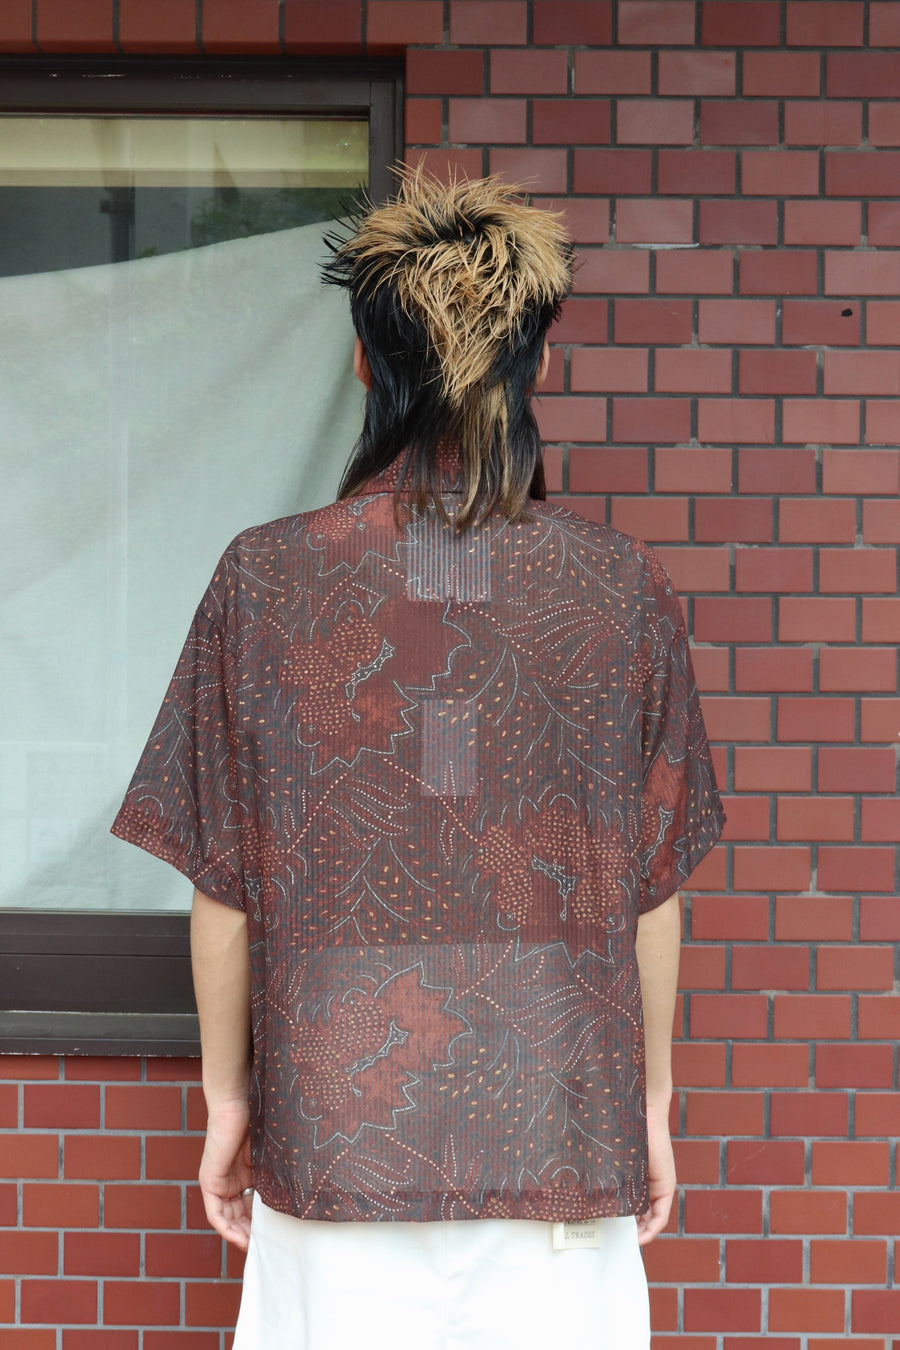 elephant TRIBAL fabrics  FRONT PANEL ZIP SHIRT(ORANGE / BROWN)